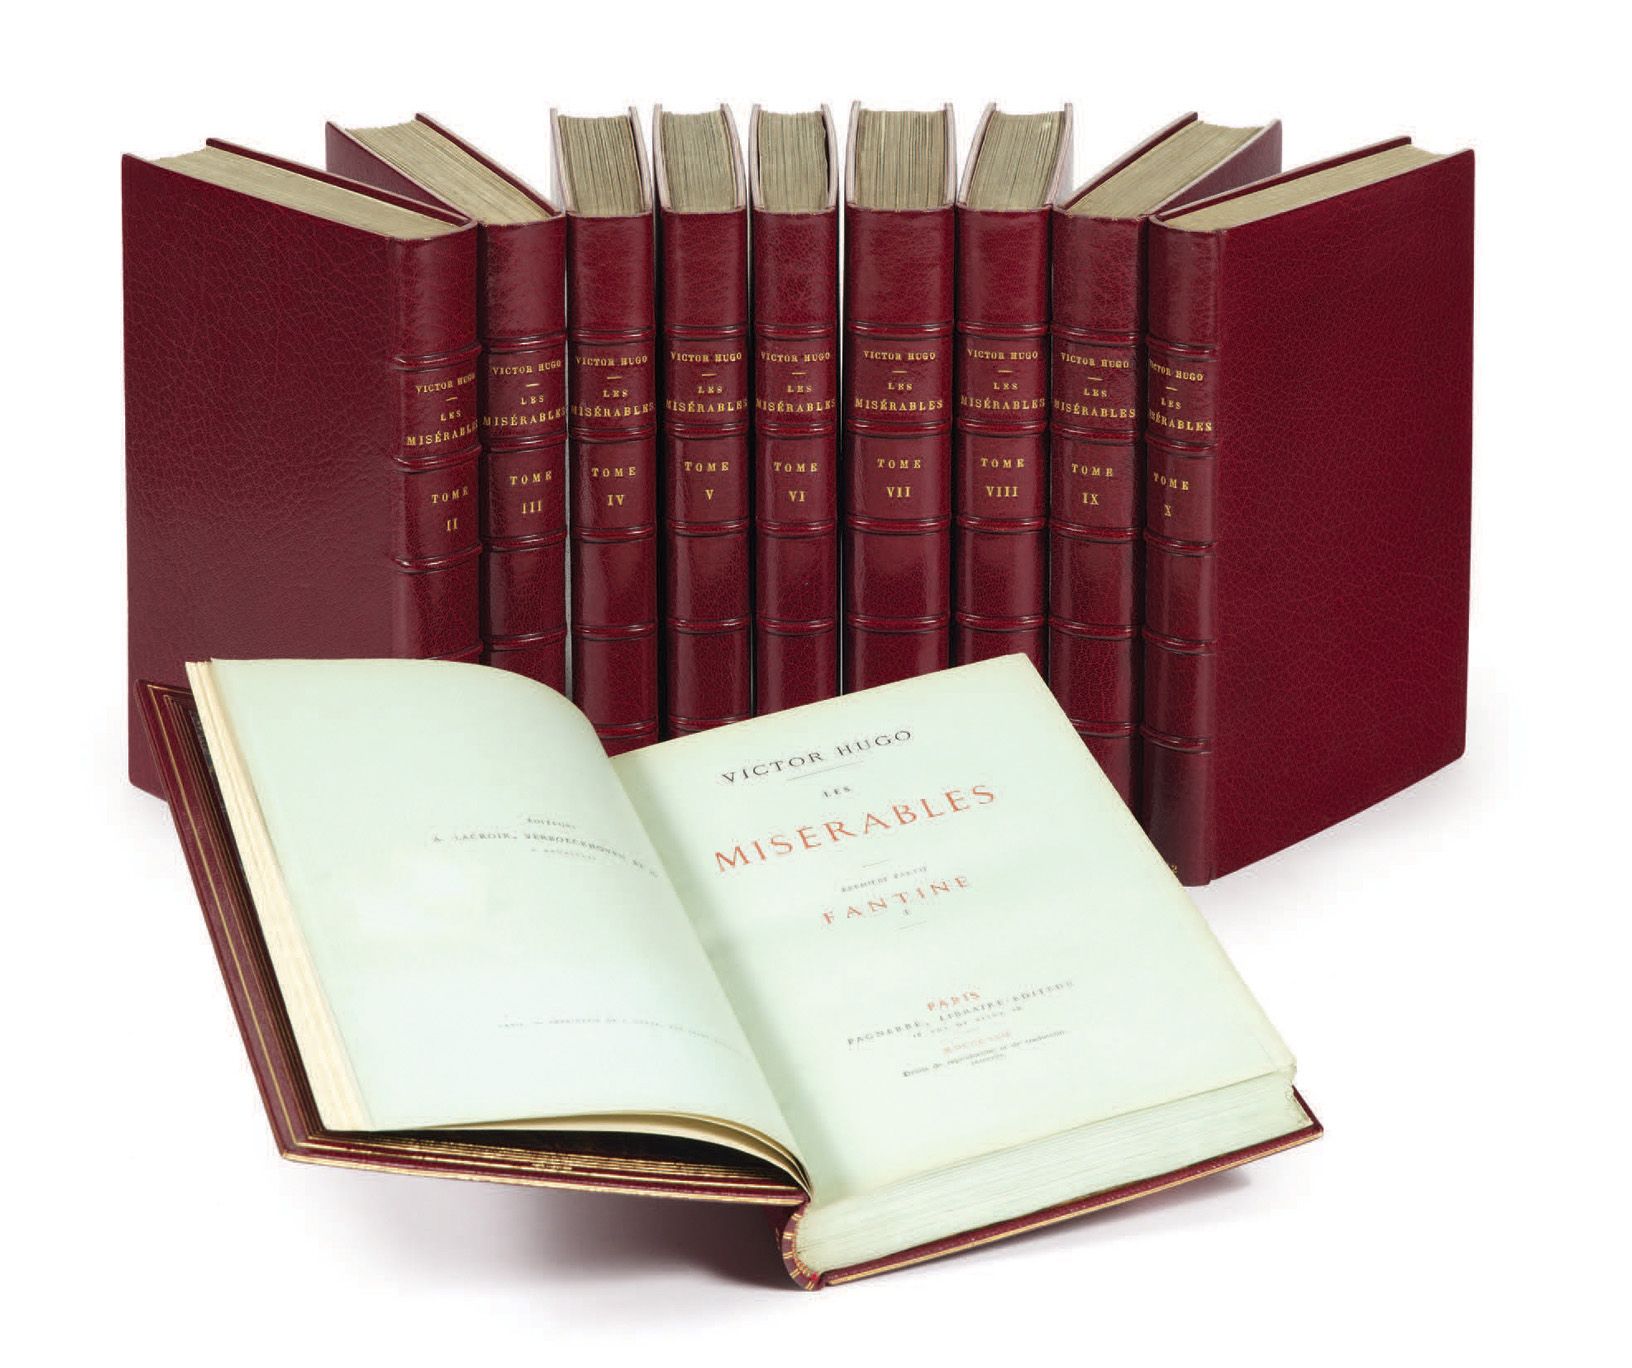 VICTOR HUGO. Les Misérables. Paris, Pagnerre, 1862.
10 volumes in-8: maroquin ro&hellip;